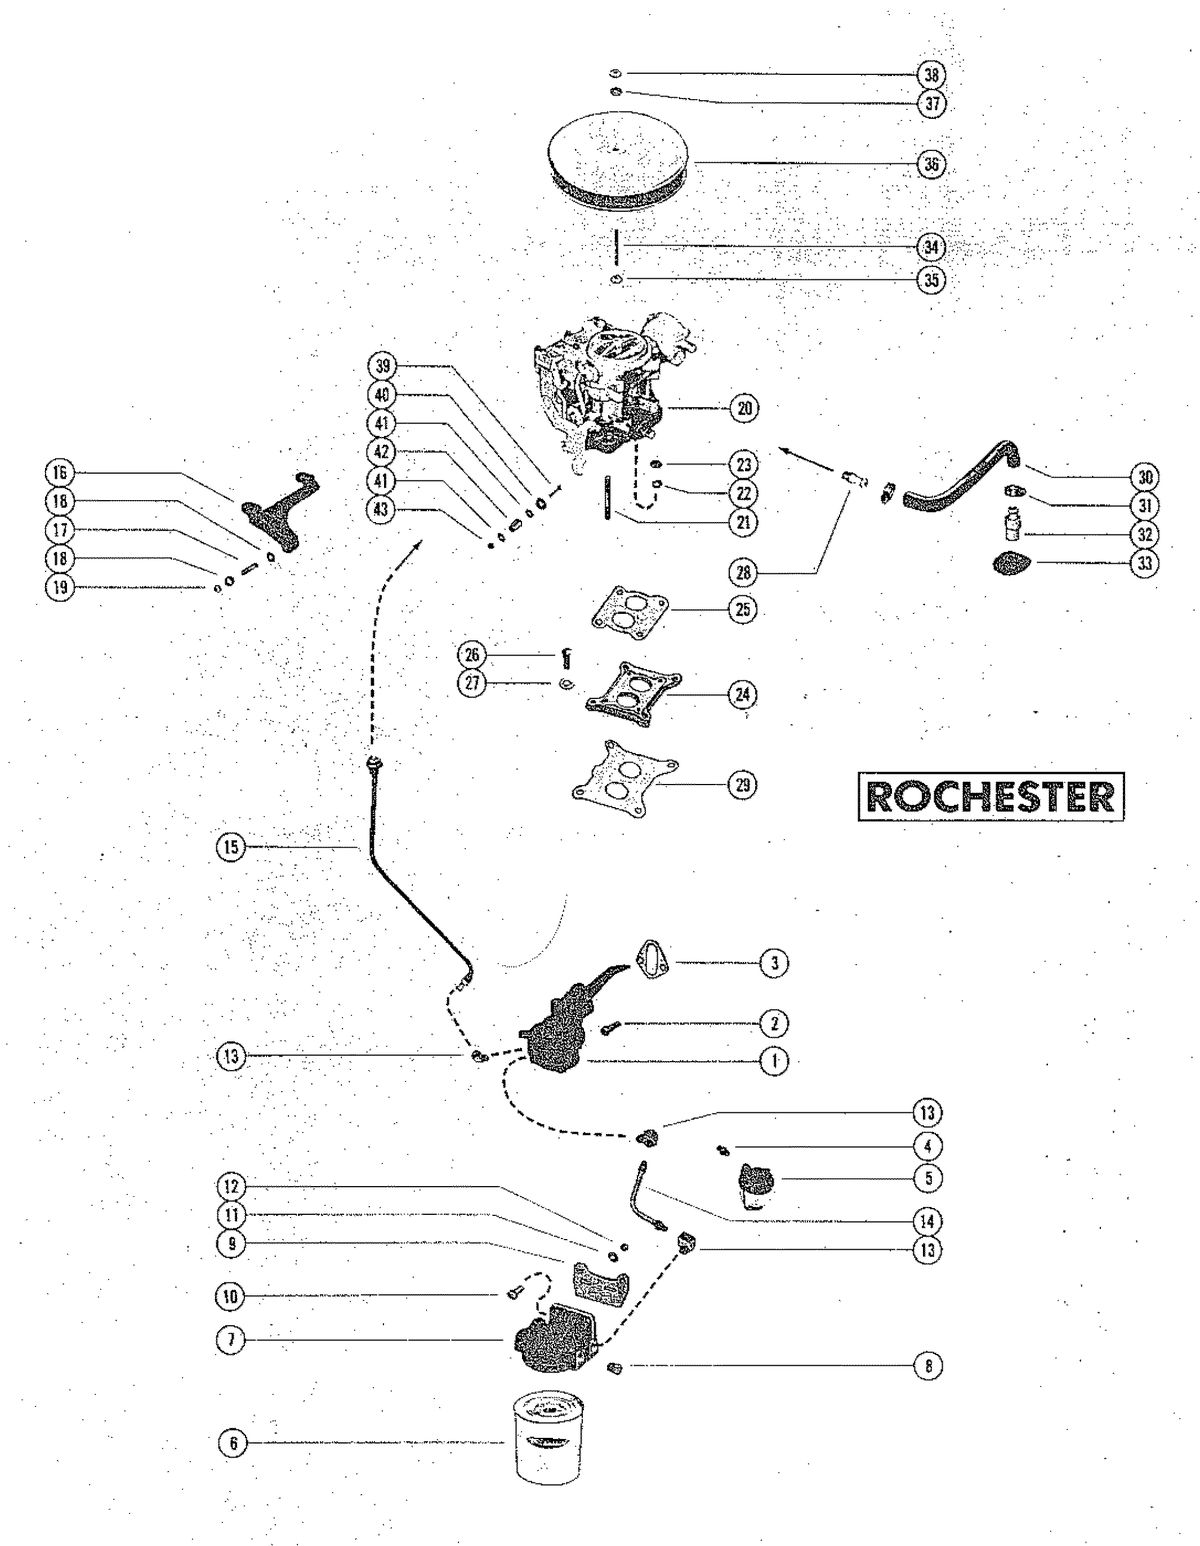 MERCRUISER 888 (2 BBL)ENGINE FUEL PUMP, FUEL FILTER AND CARBURETOR (ROCHESTER)